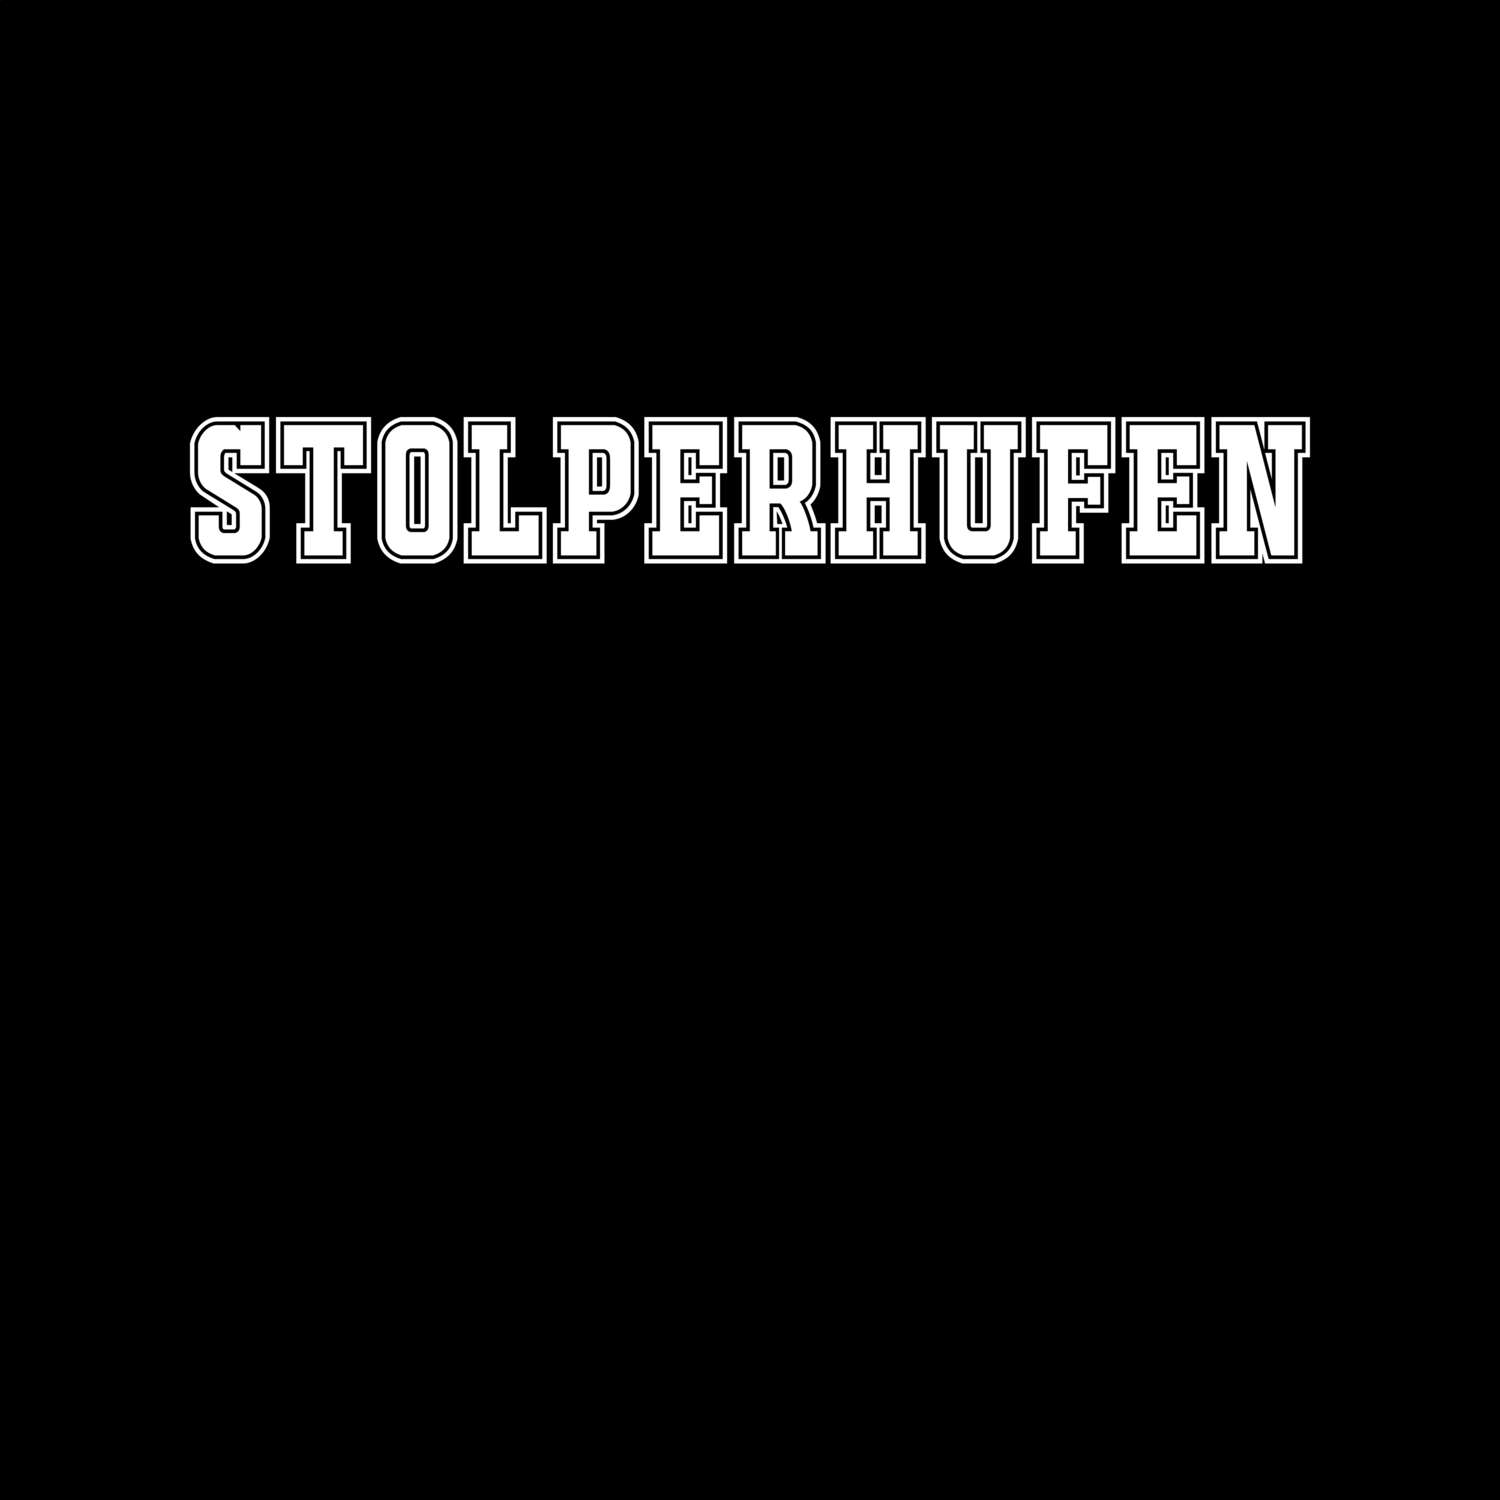 Stolperhufen T-Shirt »Classic«